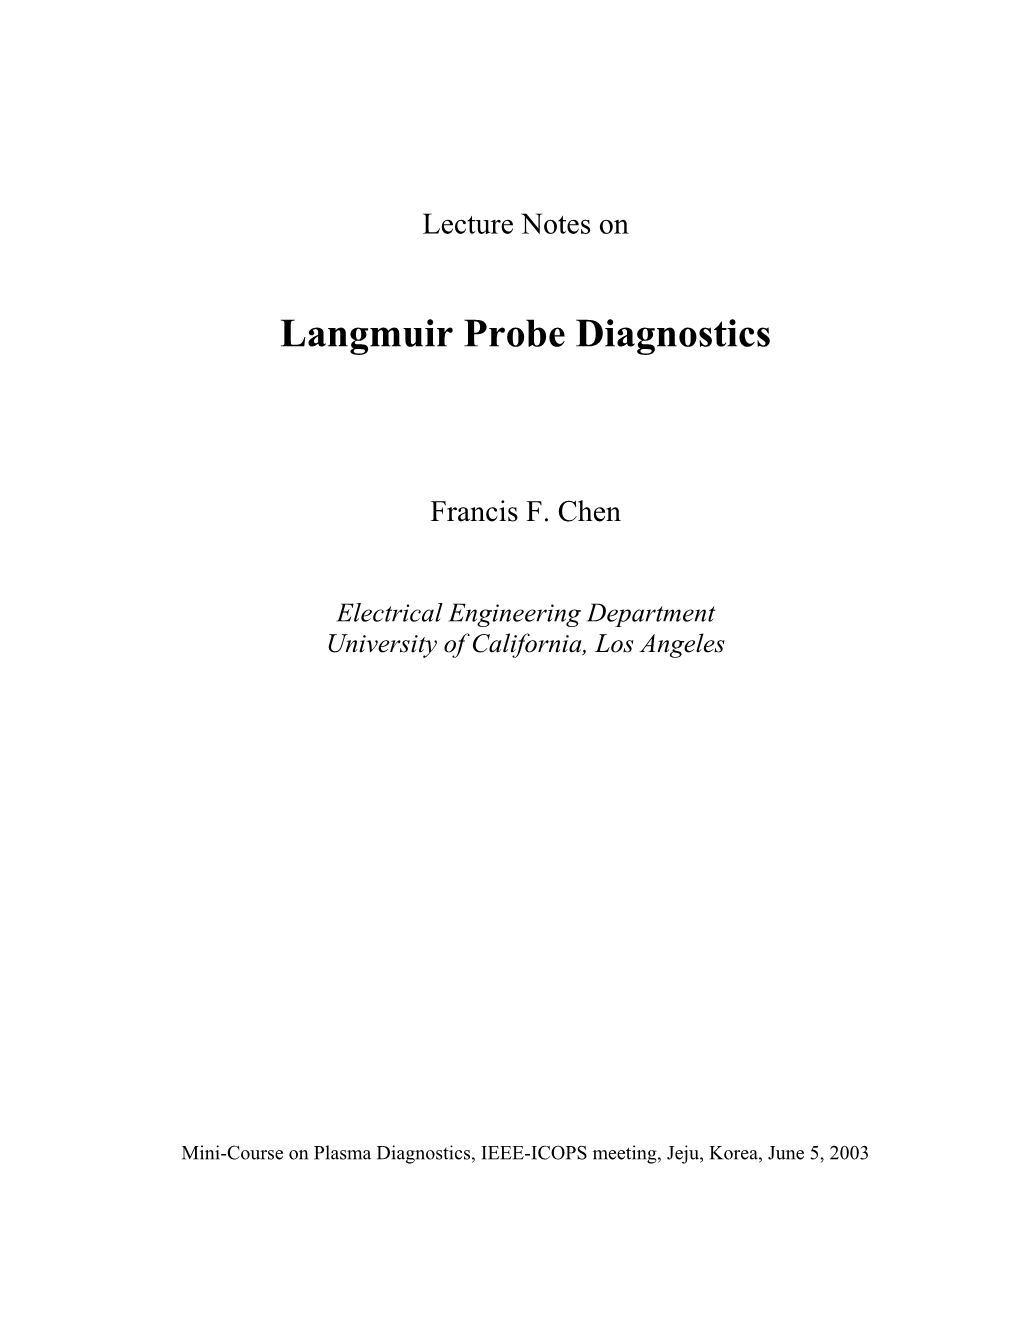 Langmuir Probe Diagnostics